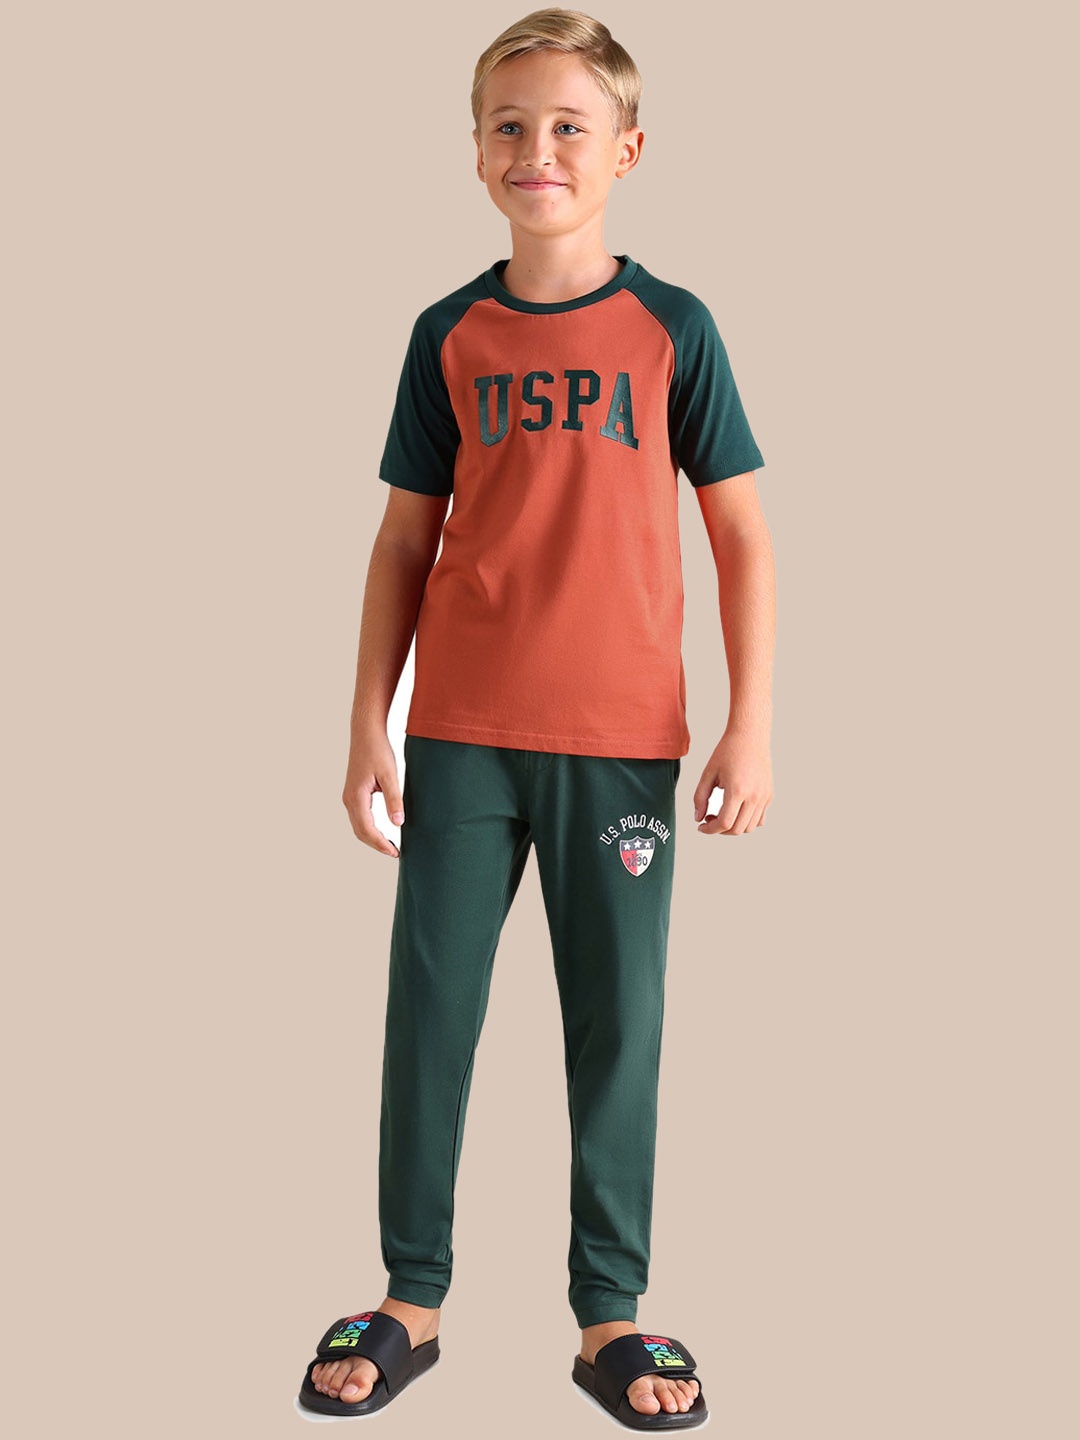 

U.S. Polo Assn. Kids Boys Colourblocked Crew Neck Pure Cotton Lounge T-shirt, Red